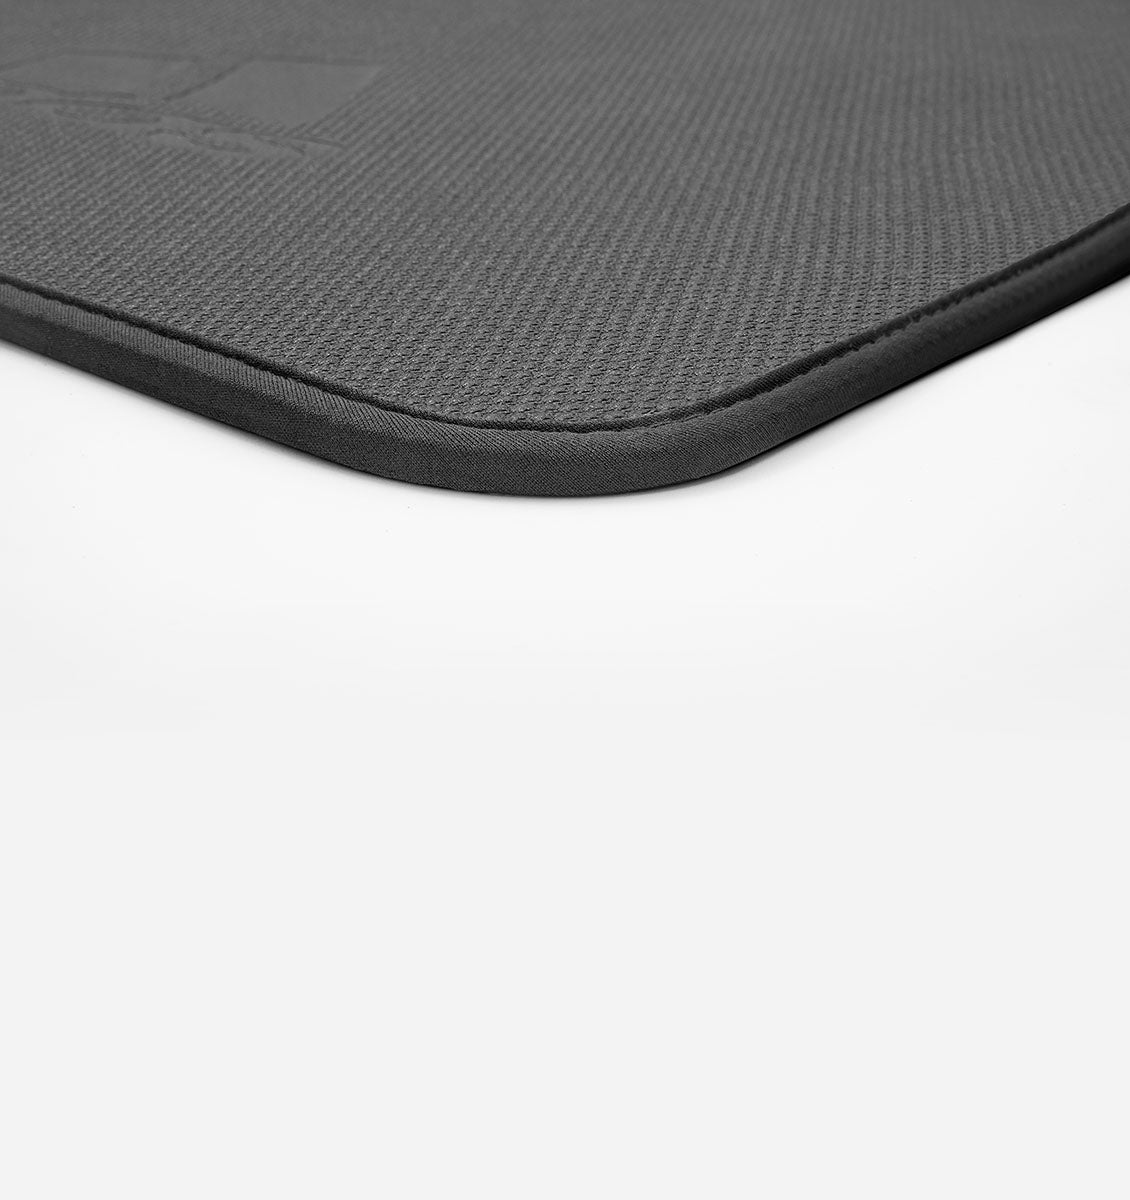 adidas Professional Yoga Mat - 5mm - Black - 7